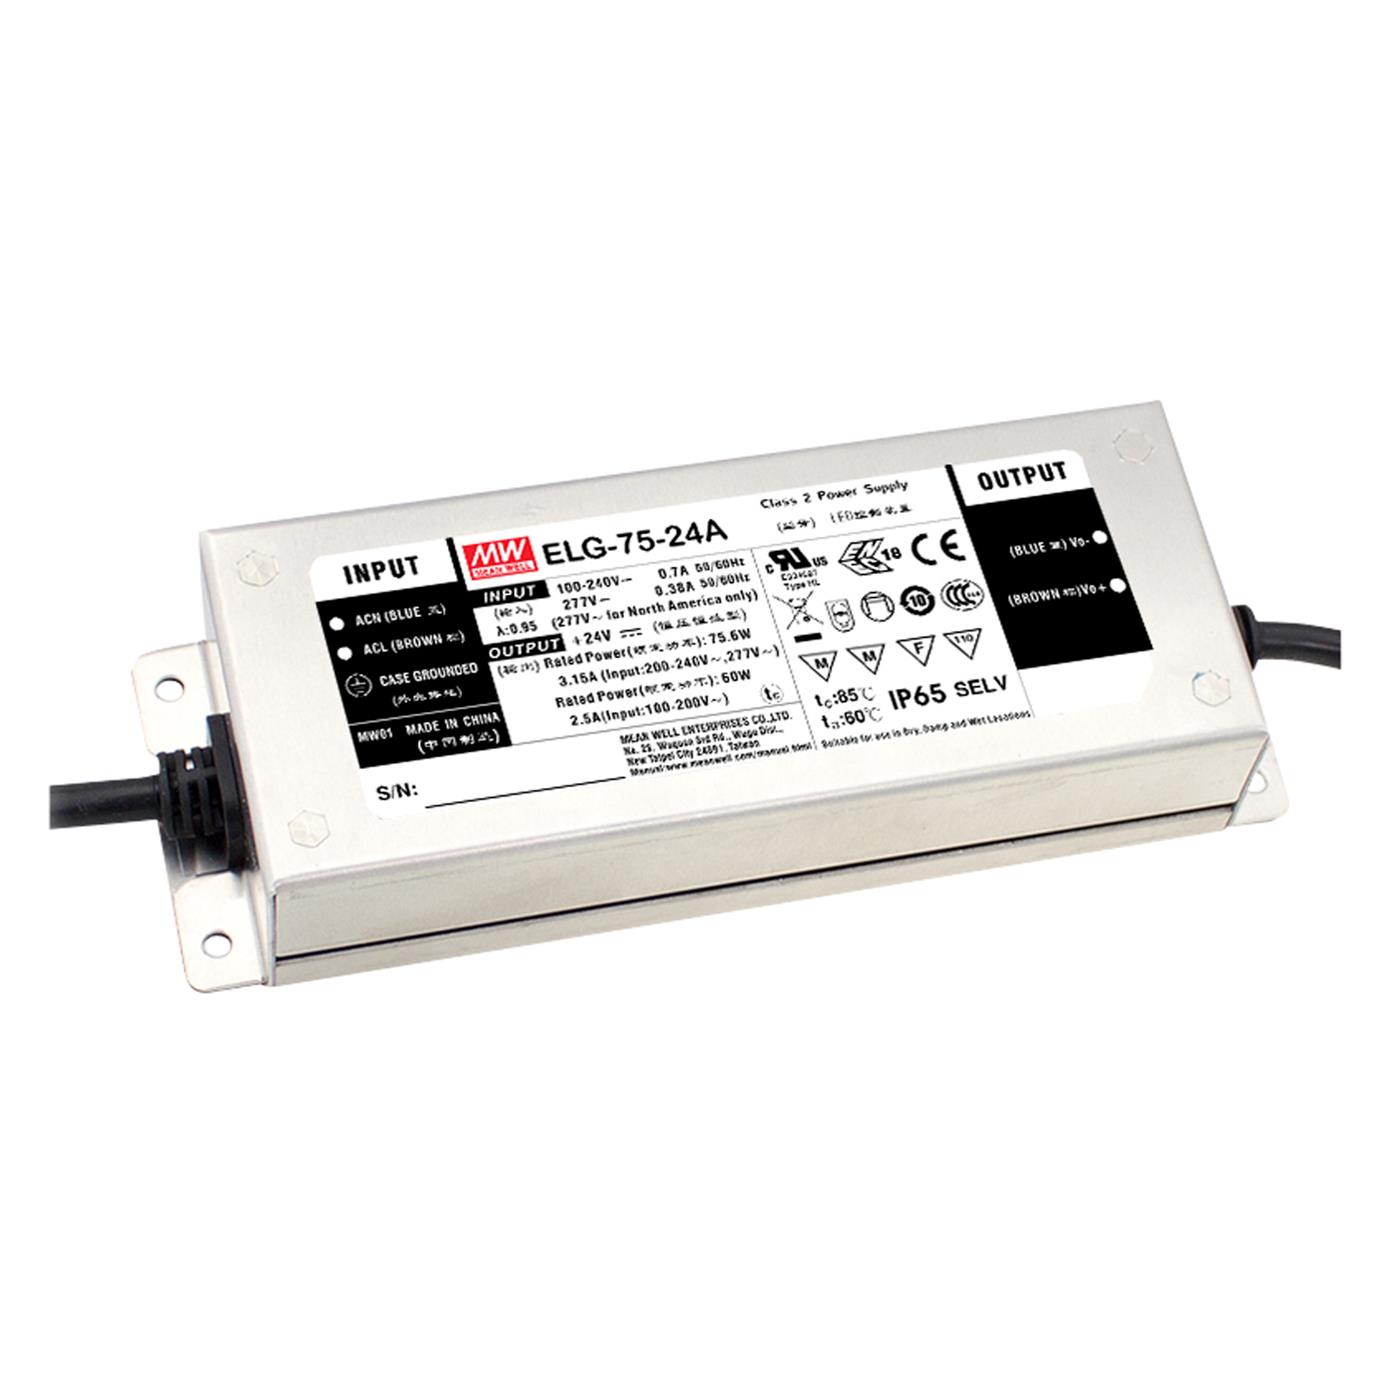 ELG-75-24A-3Y 75,6W 24V 3,15A LED Netzteil Trafo Treiber IP65 Dimmbar Potentiometer PWM